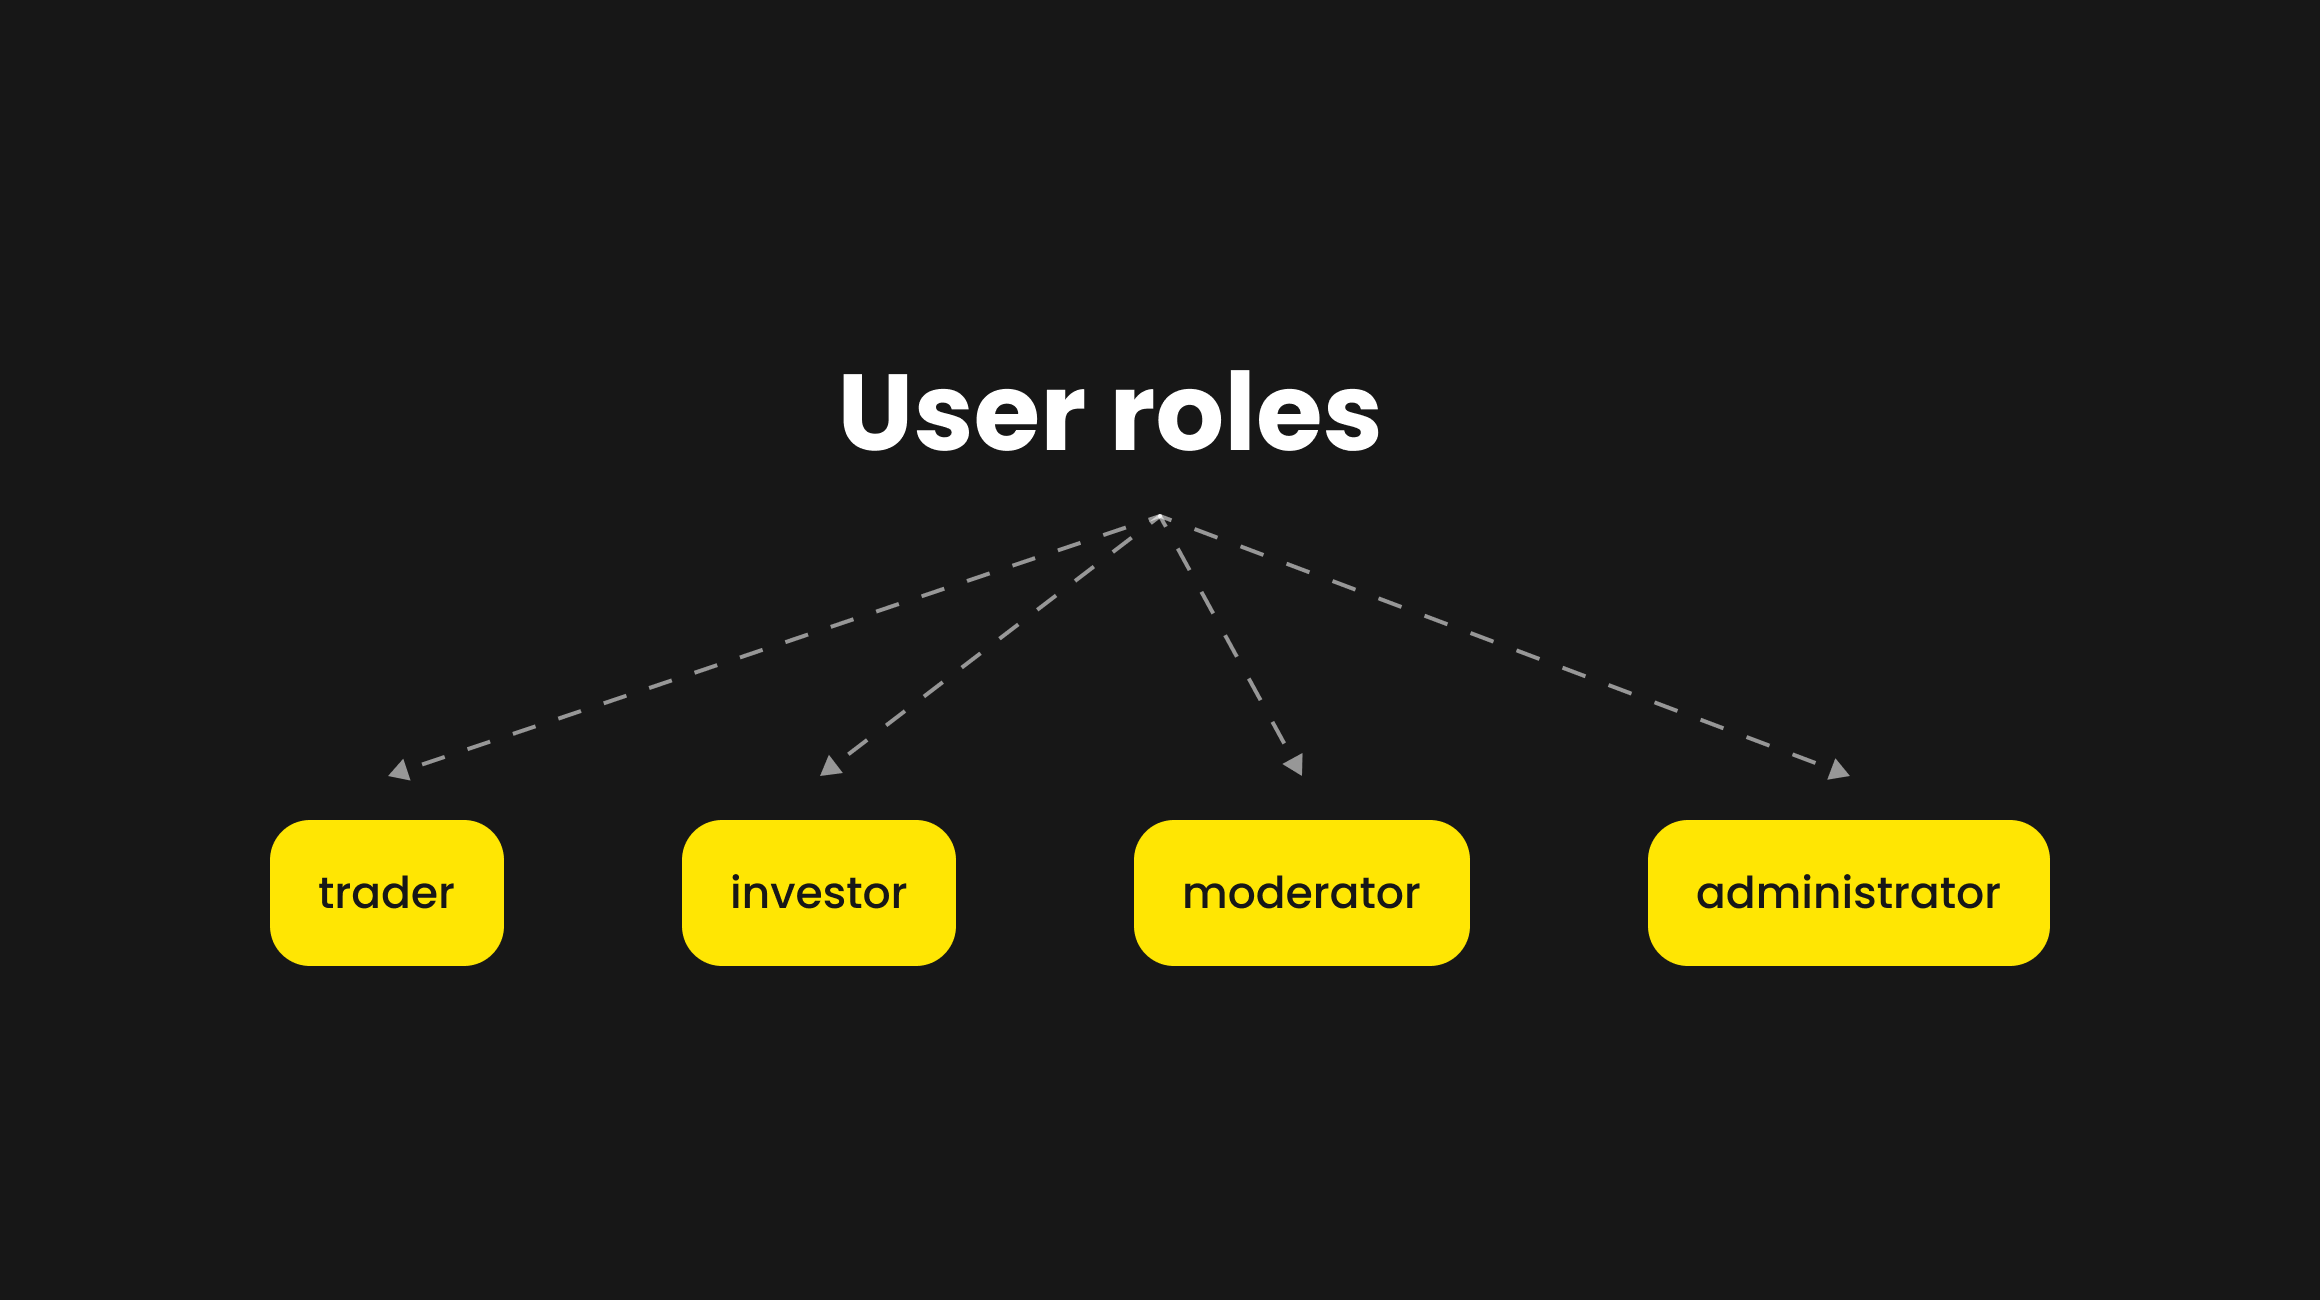 User roles for a trading platform